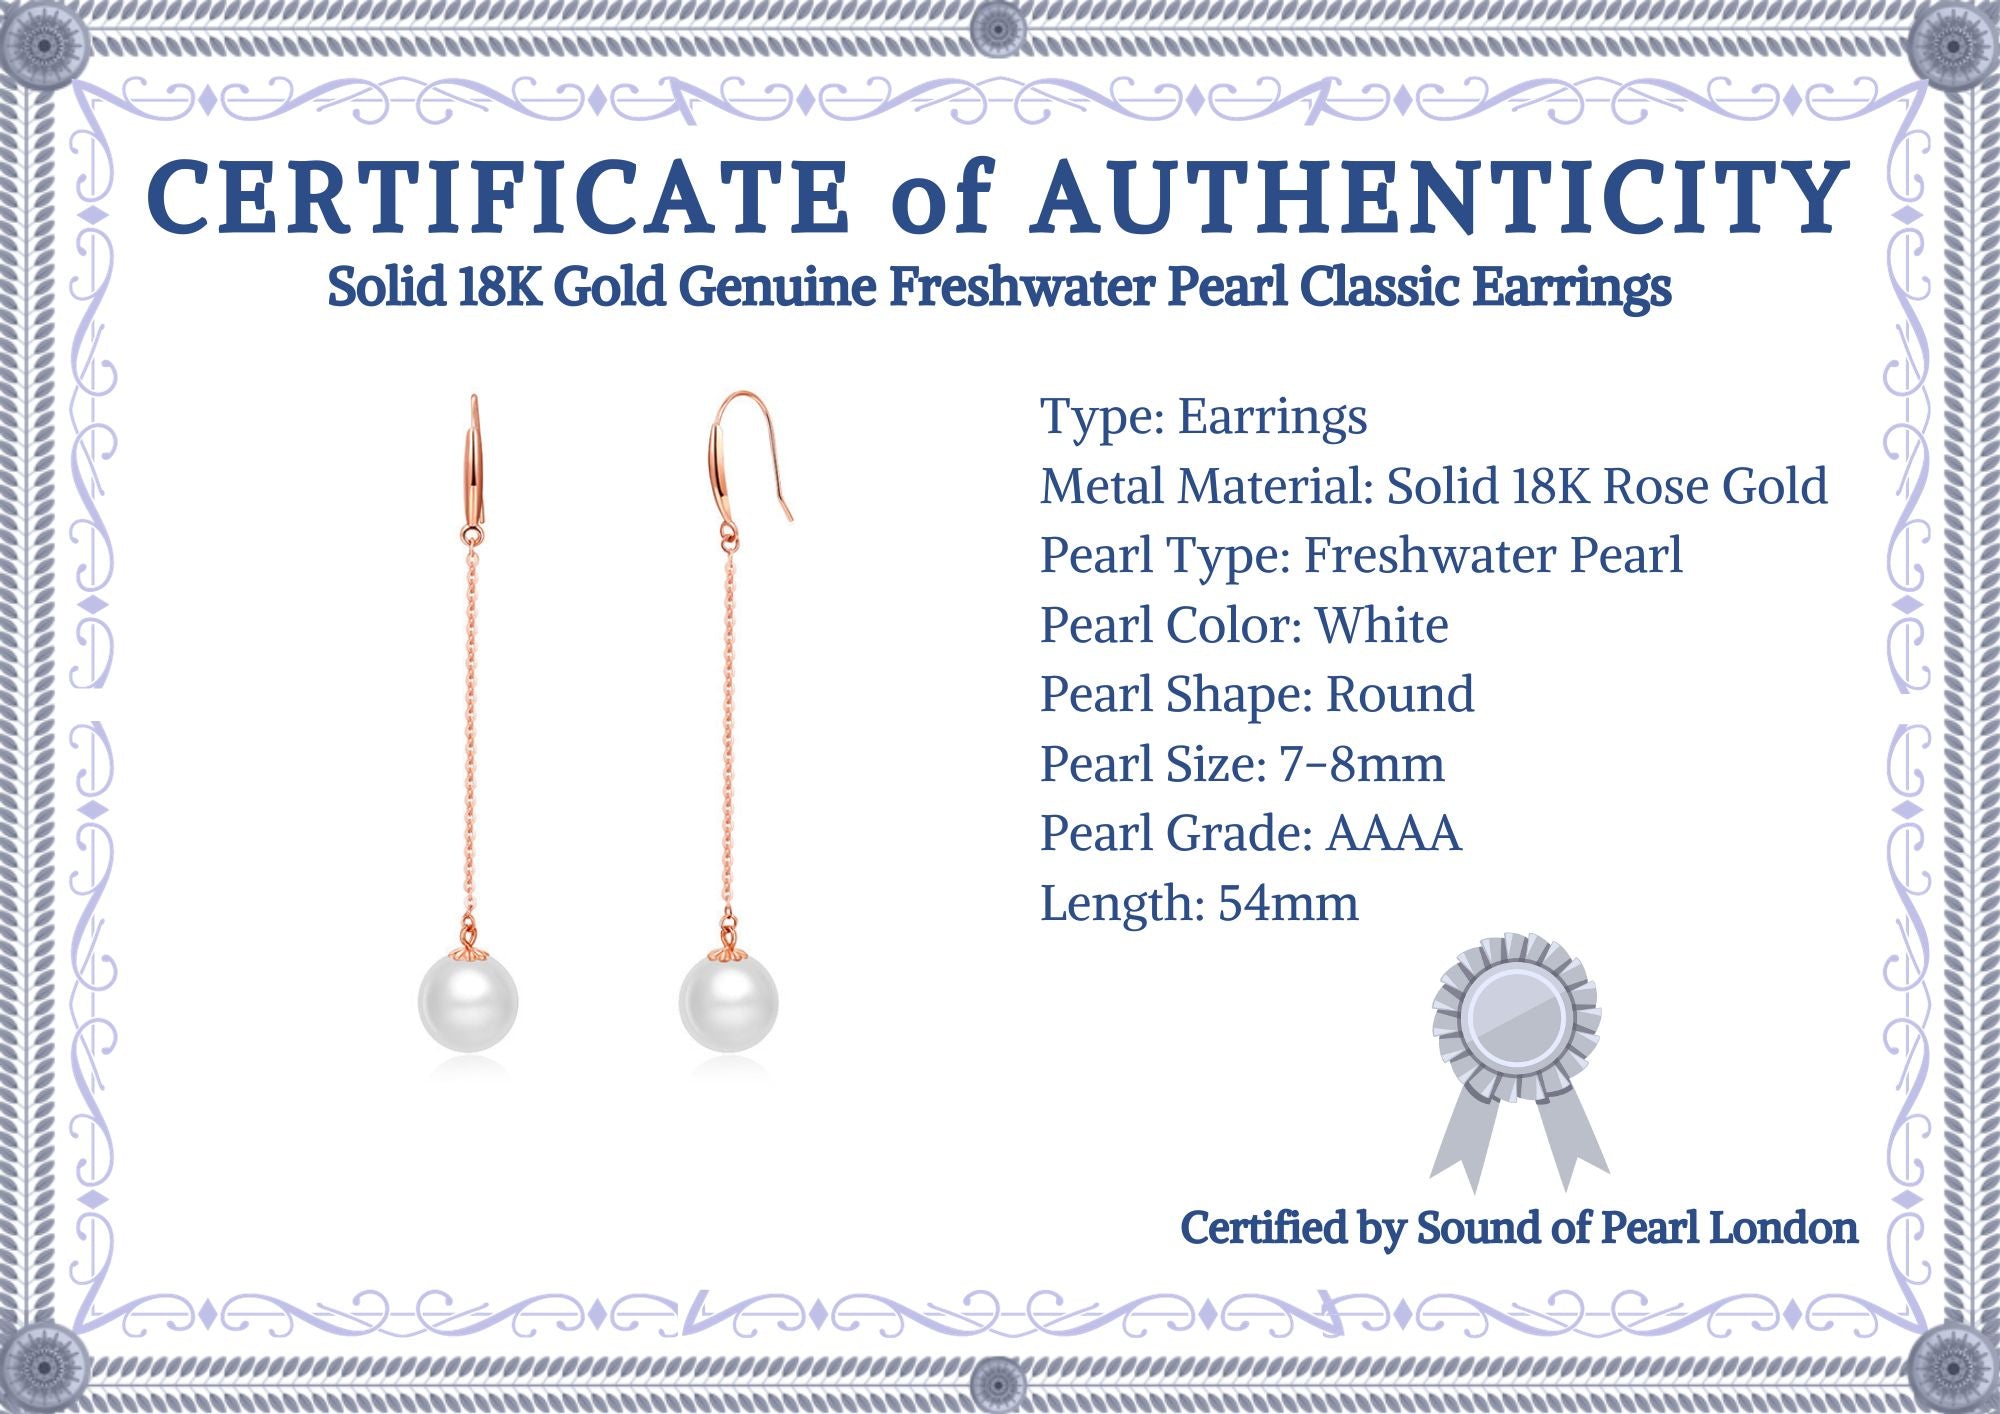 Solid 18K Gold Genuine Freshwater Pearl Classic Earrings